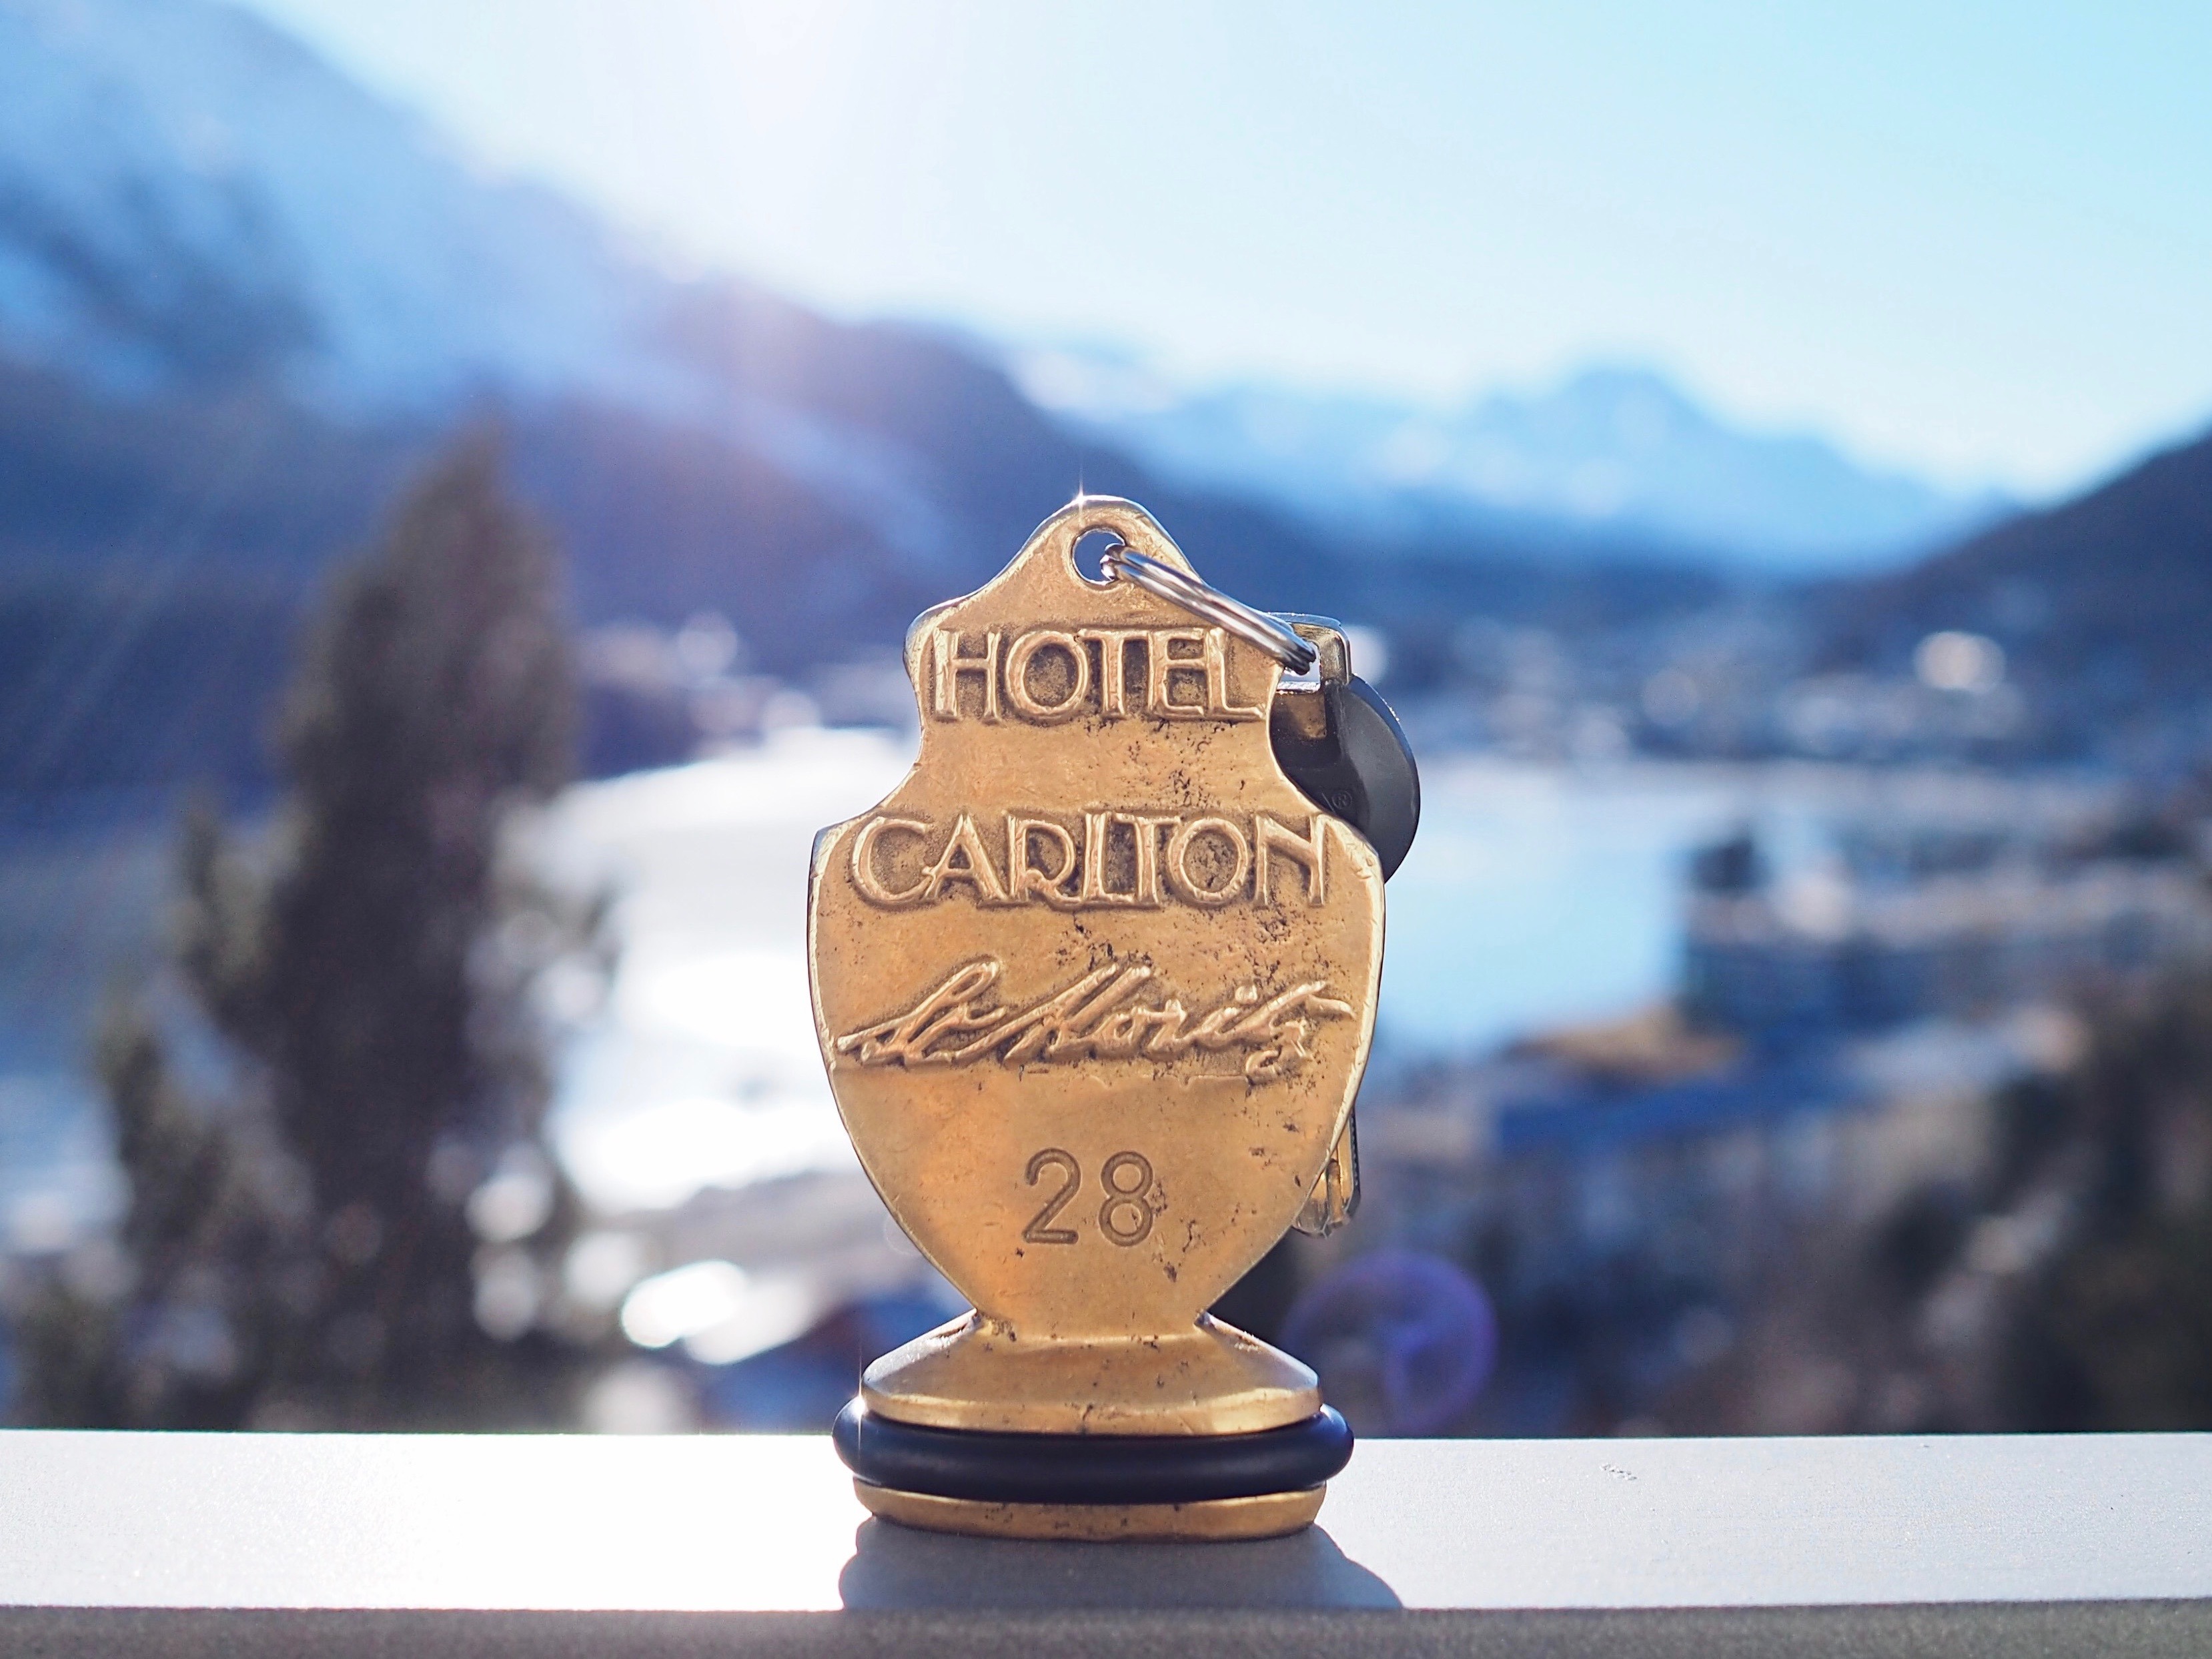 Carlton-Hotel-St-Moritz